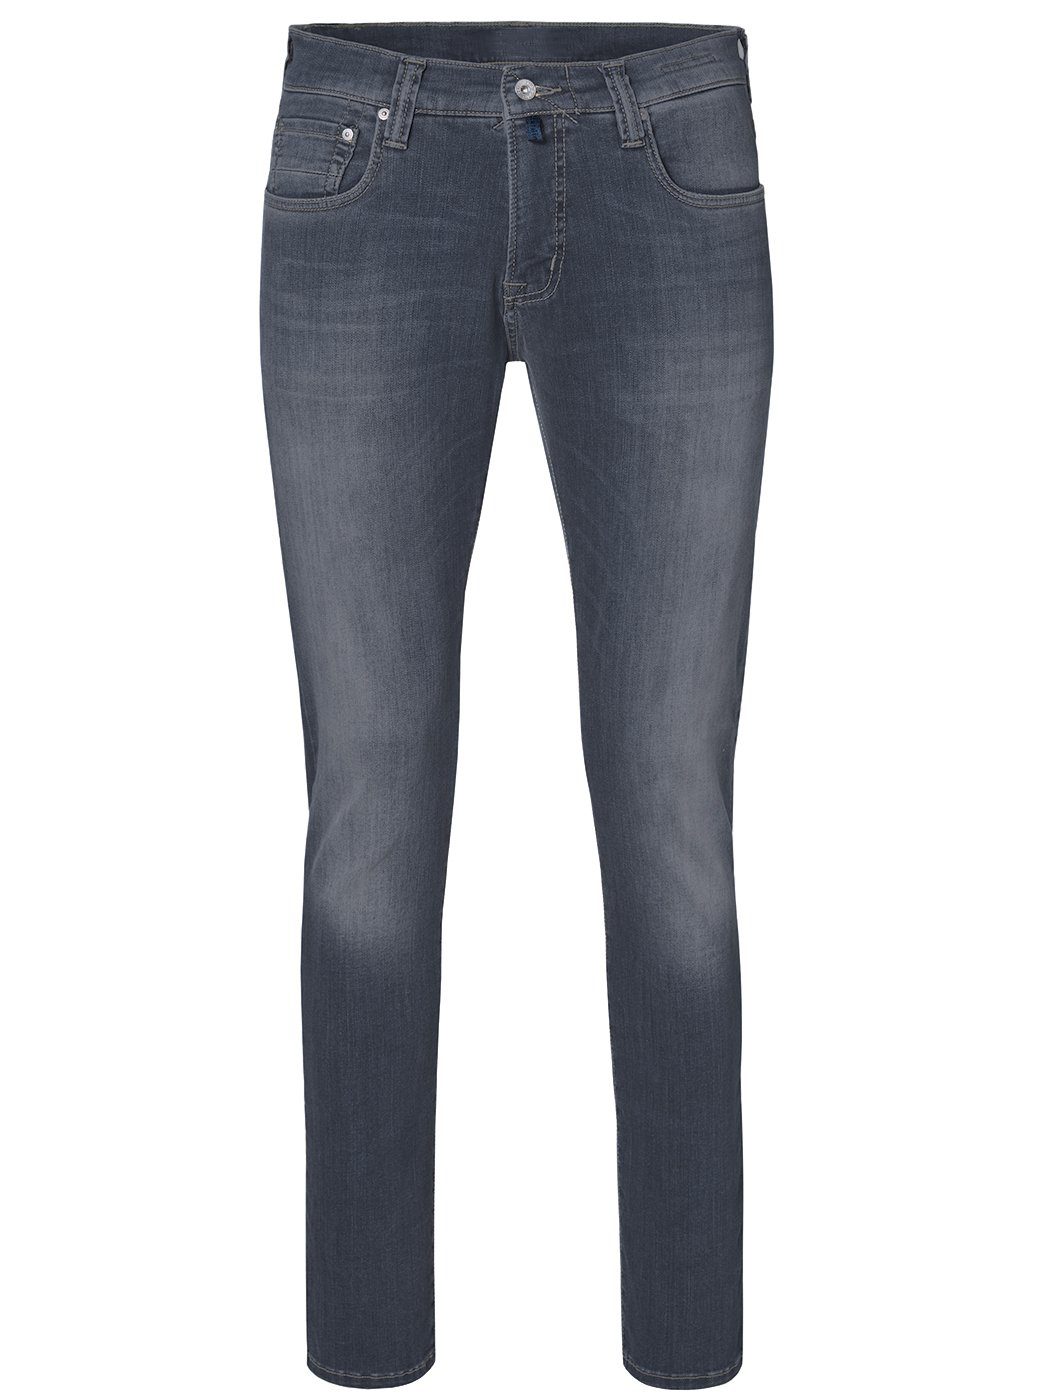 Pierre Cardin 5-Pocket-Jeans PIERRE CARDIN ANTIBES anthrazit 3003 6100.83